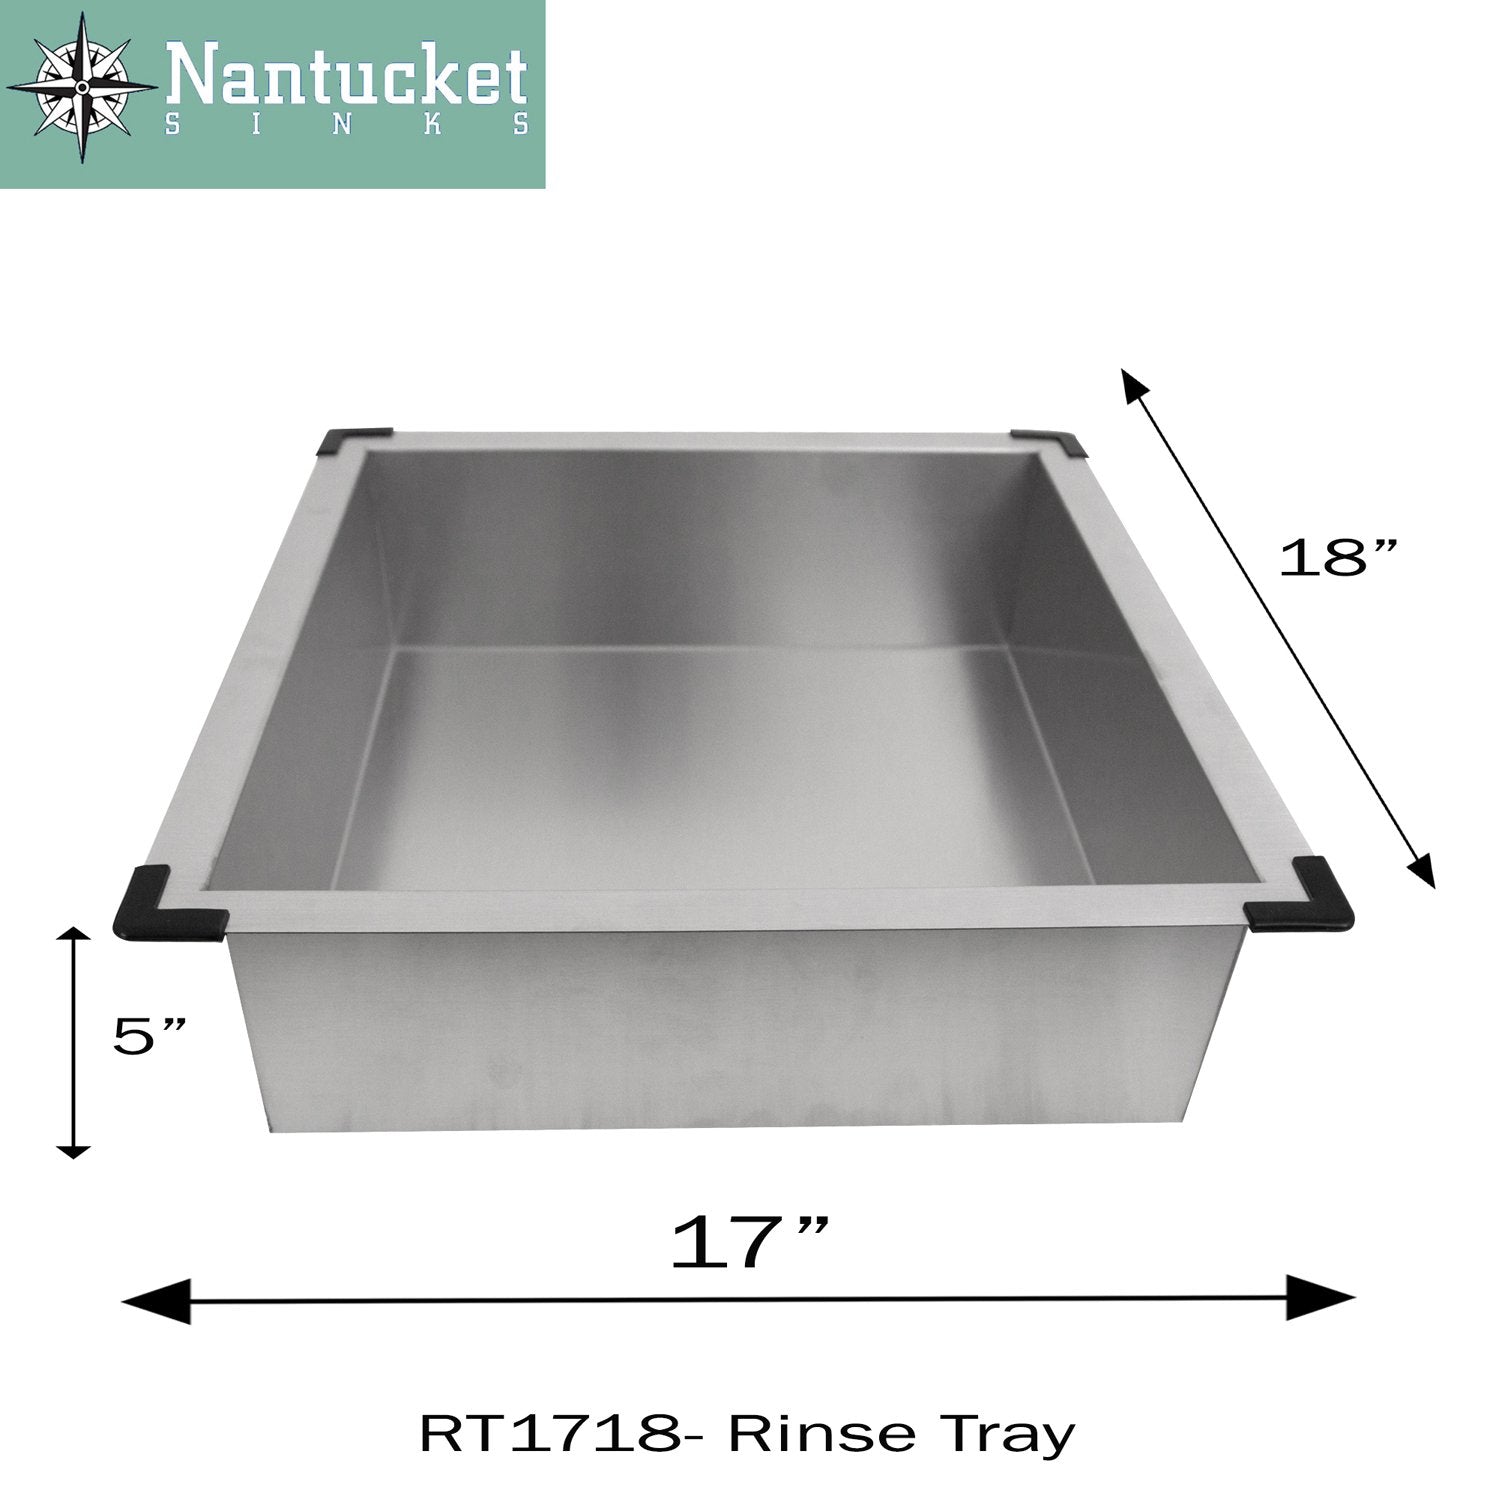 Nantucket Sinks Deluxe Rinse Tray RT1718